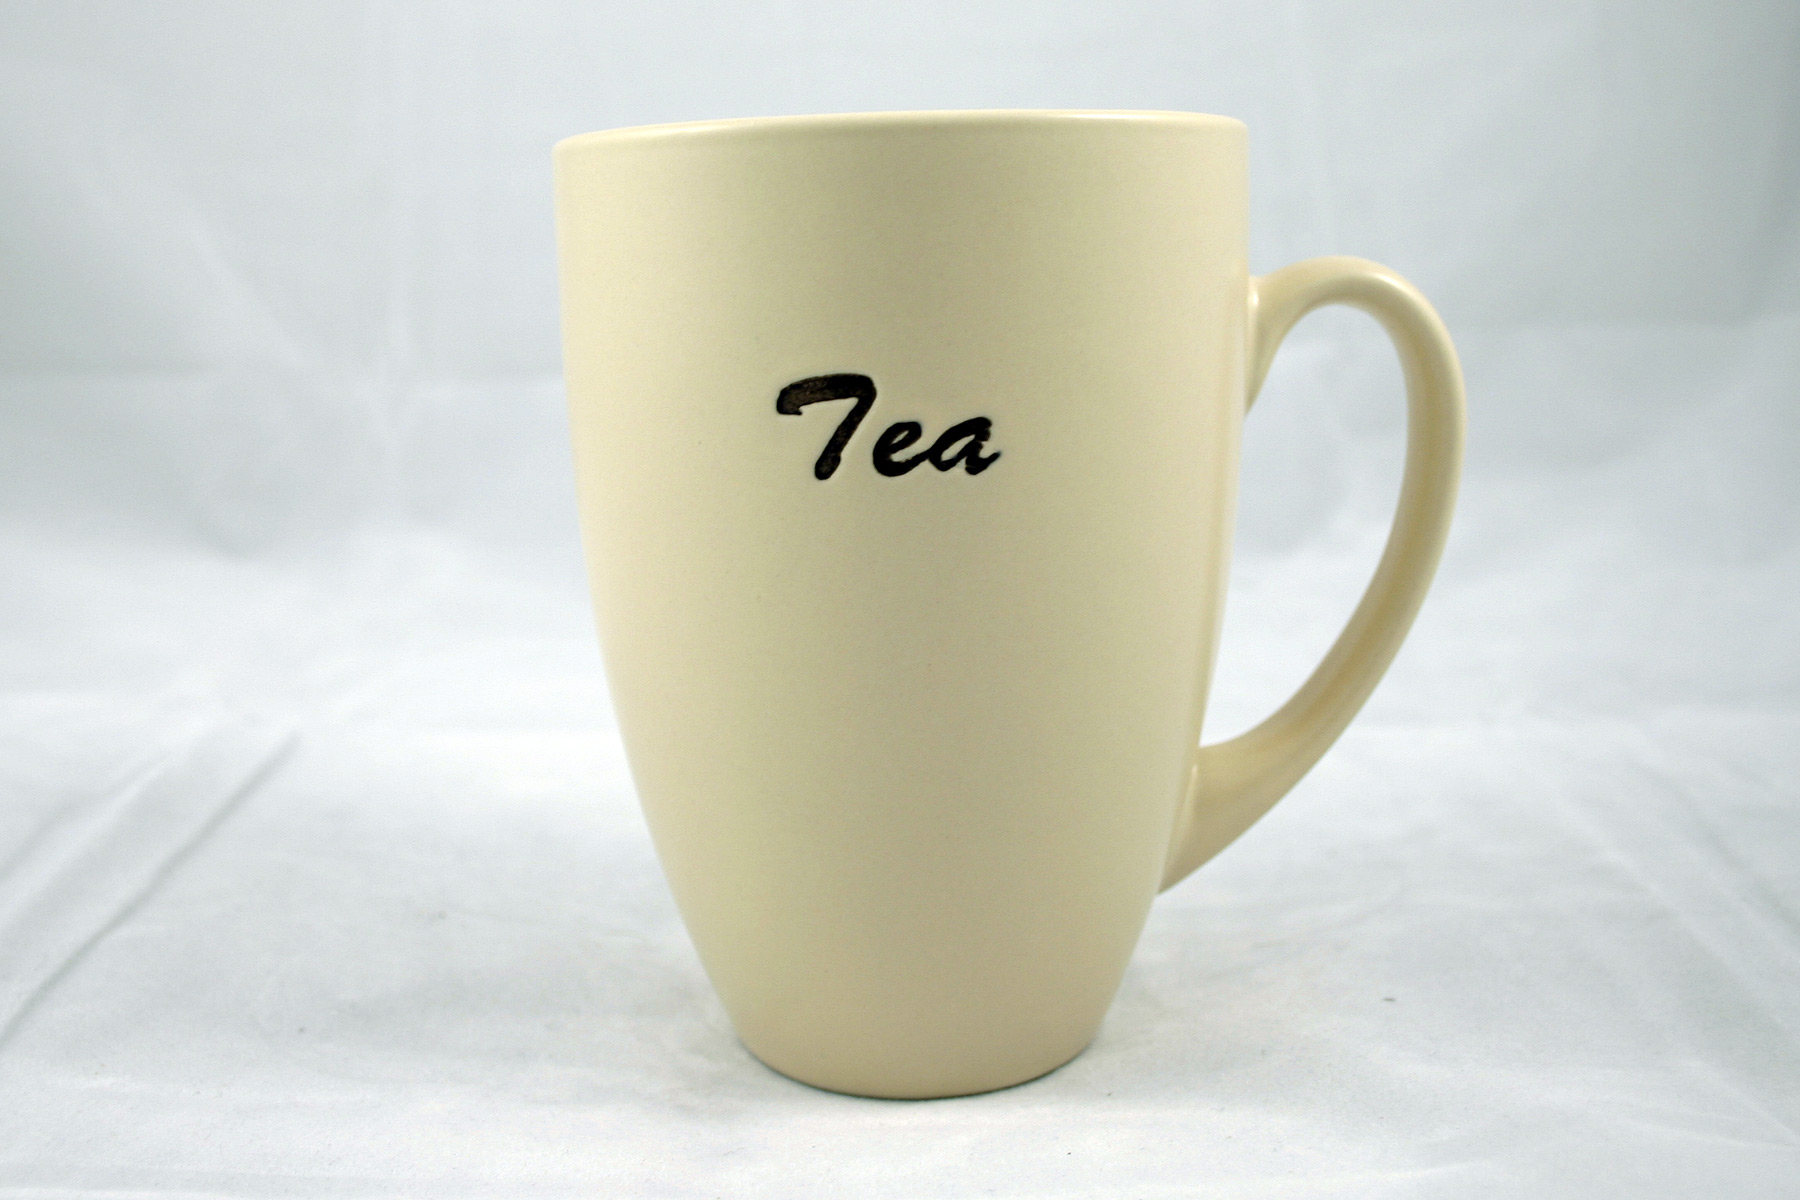 Tea mug photo